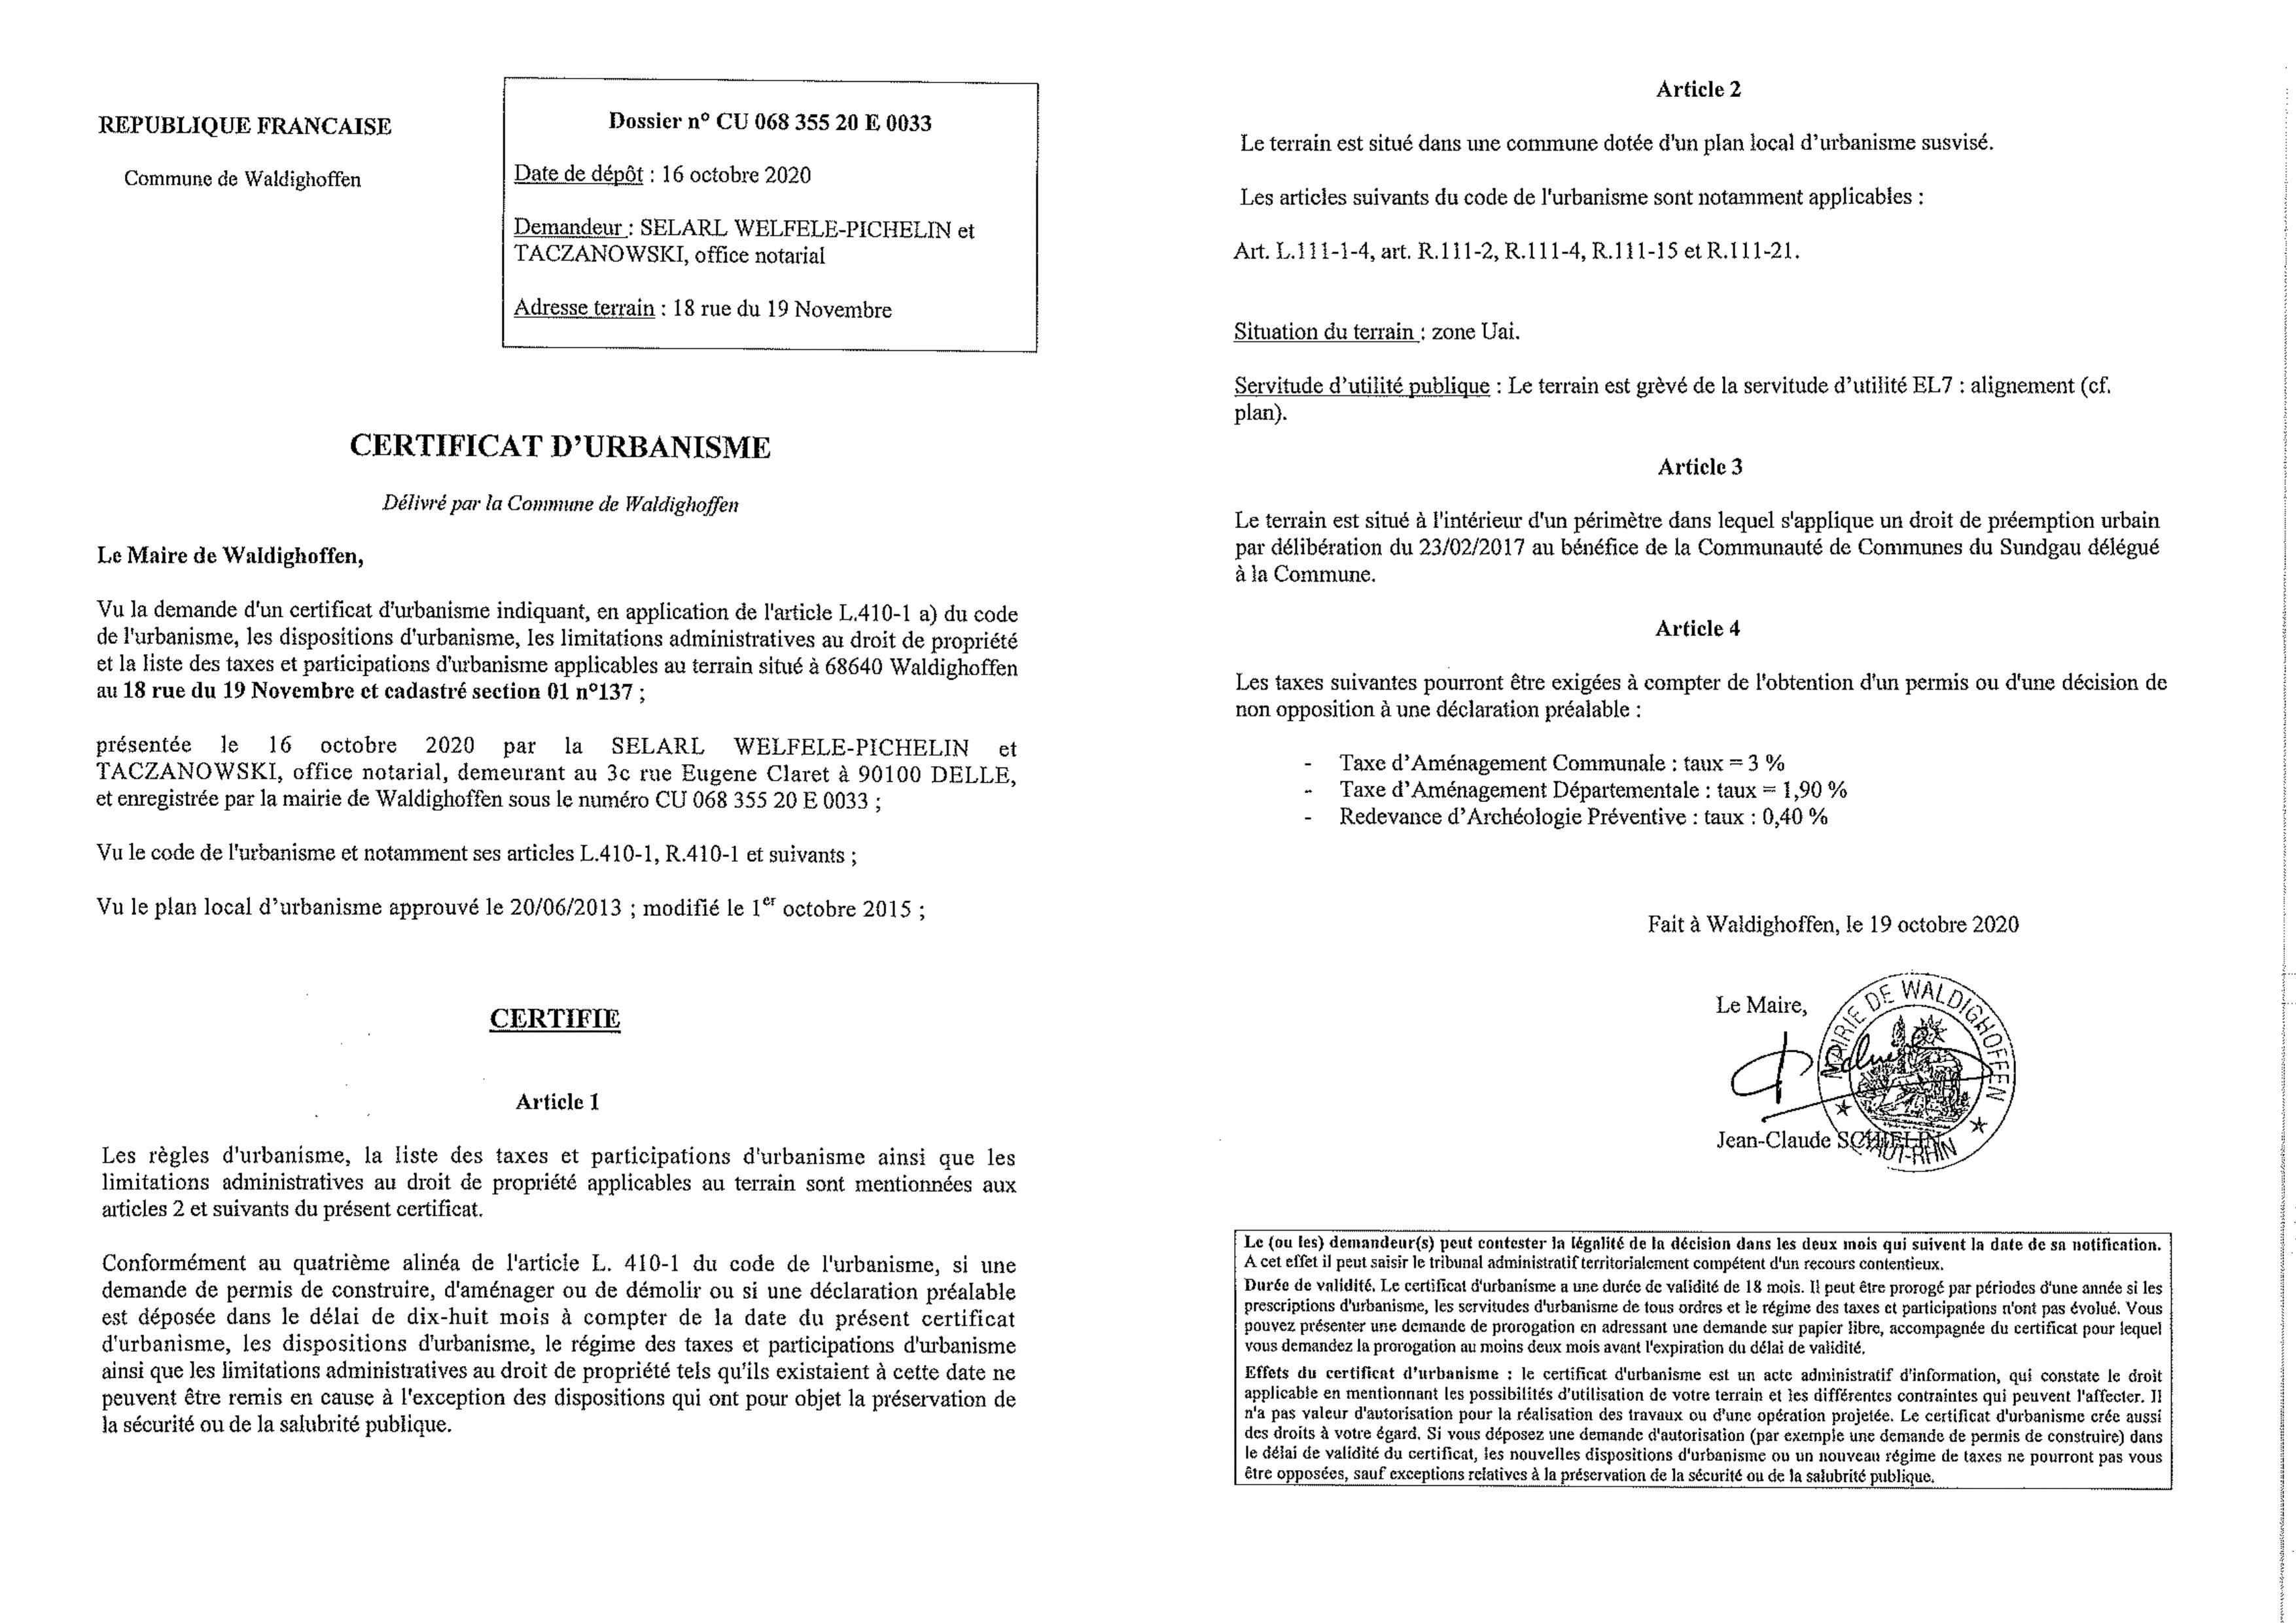 Certificat d'urbanisme établi pour la Selarl Welfele-Pichelin et Taczanowski, office notarial